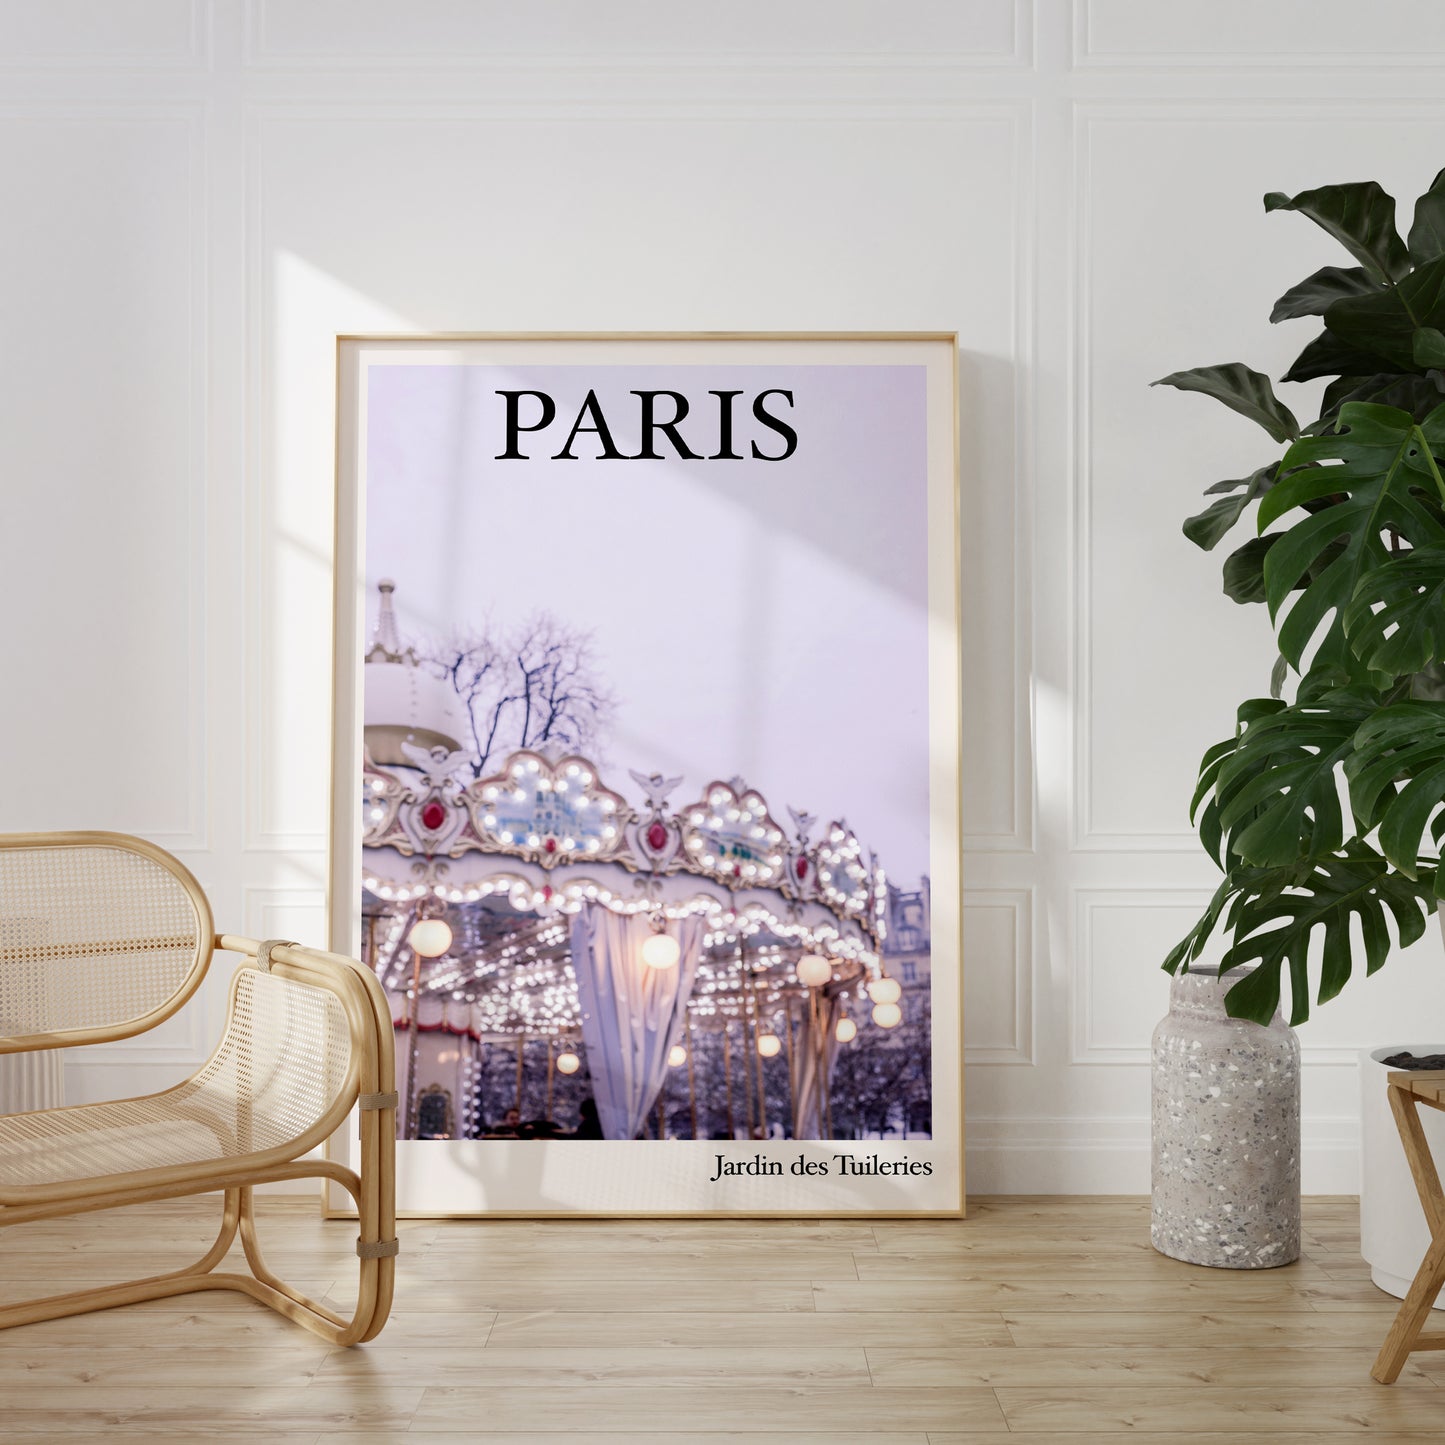 Paris Carousel Photographic Wall Poster Print